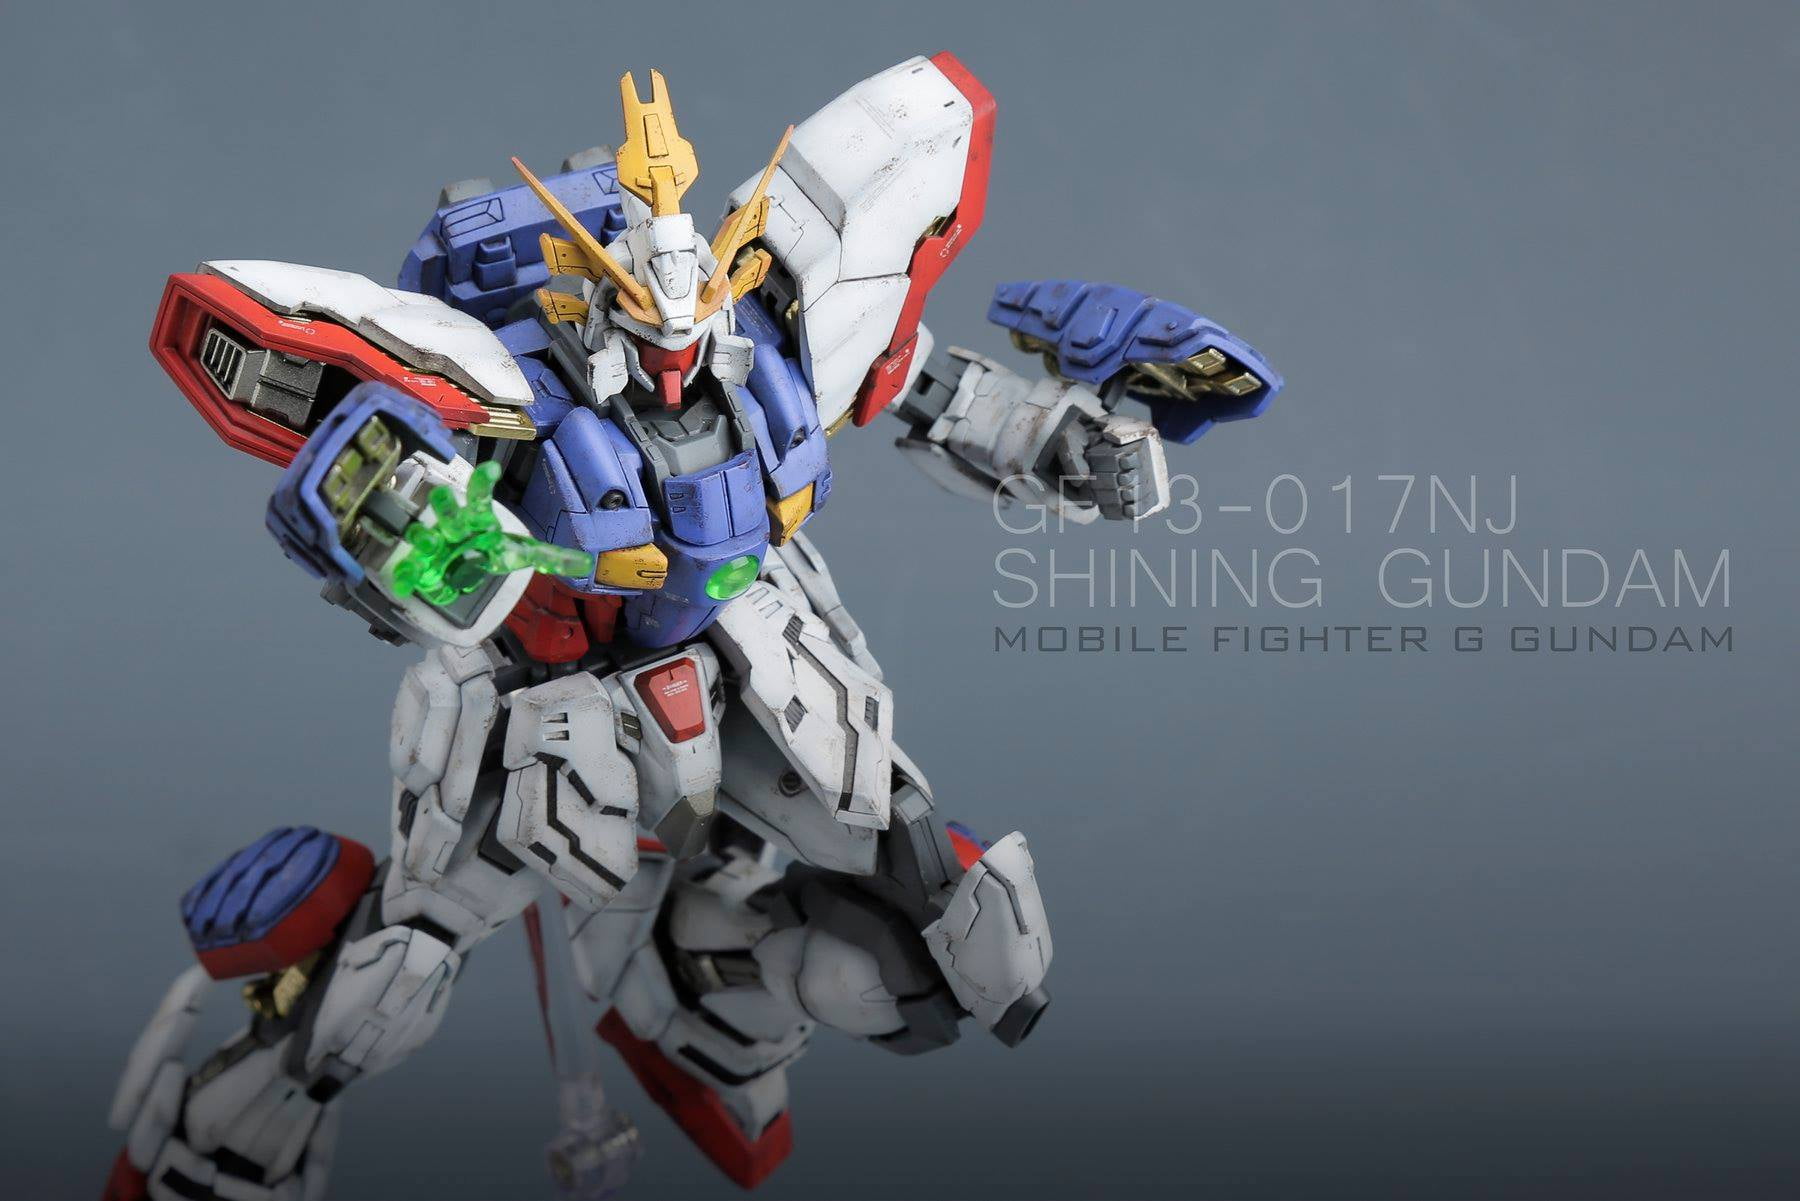 Madworks GF13-017NJ Shining Gundam MG 1/100 Resin Conversion Kit USA Seller 